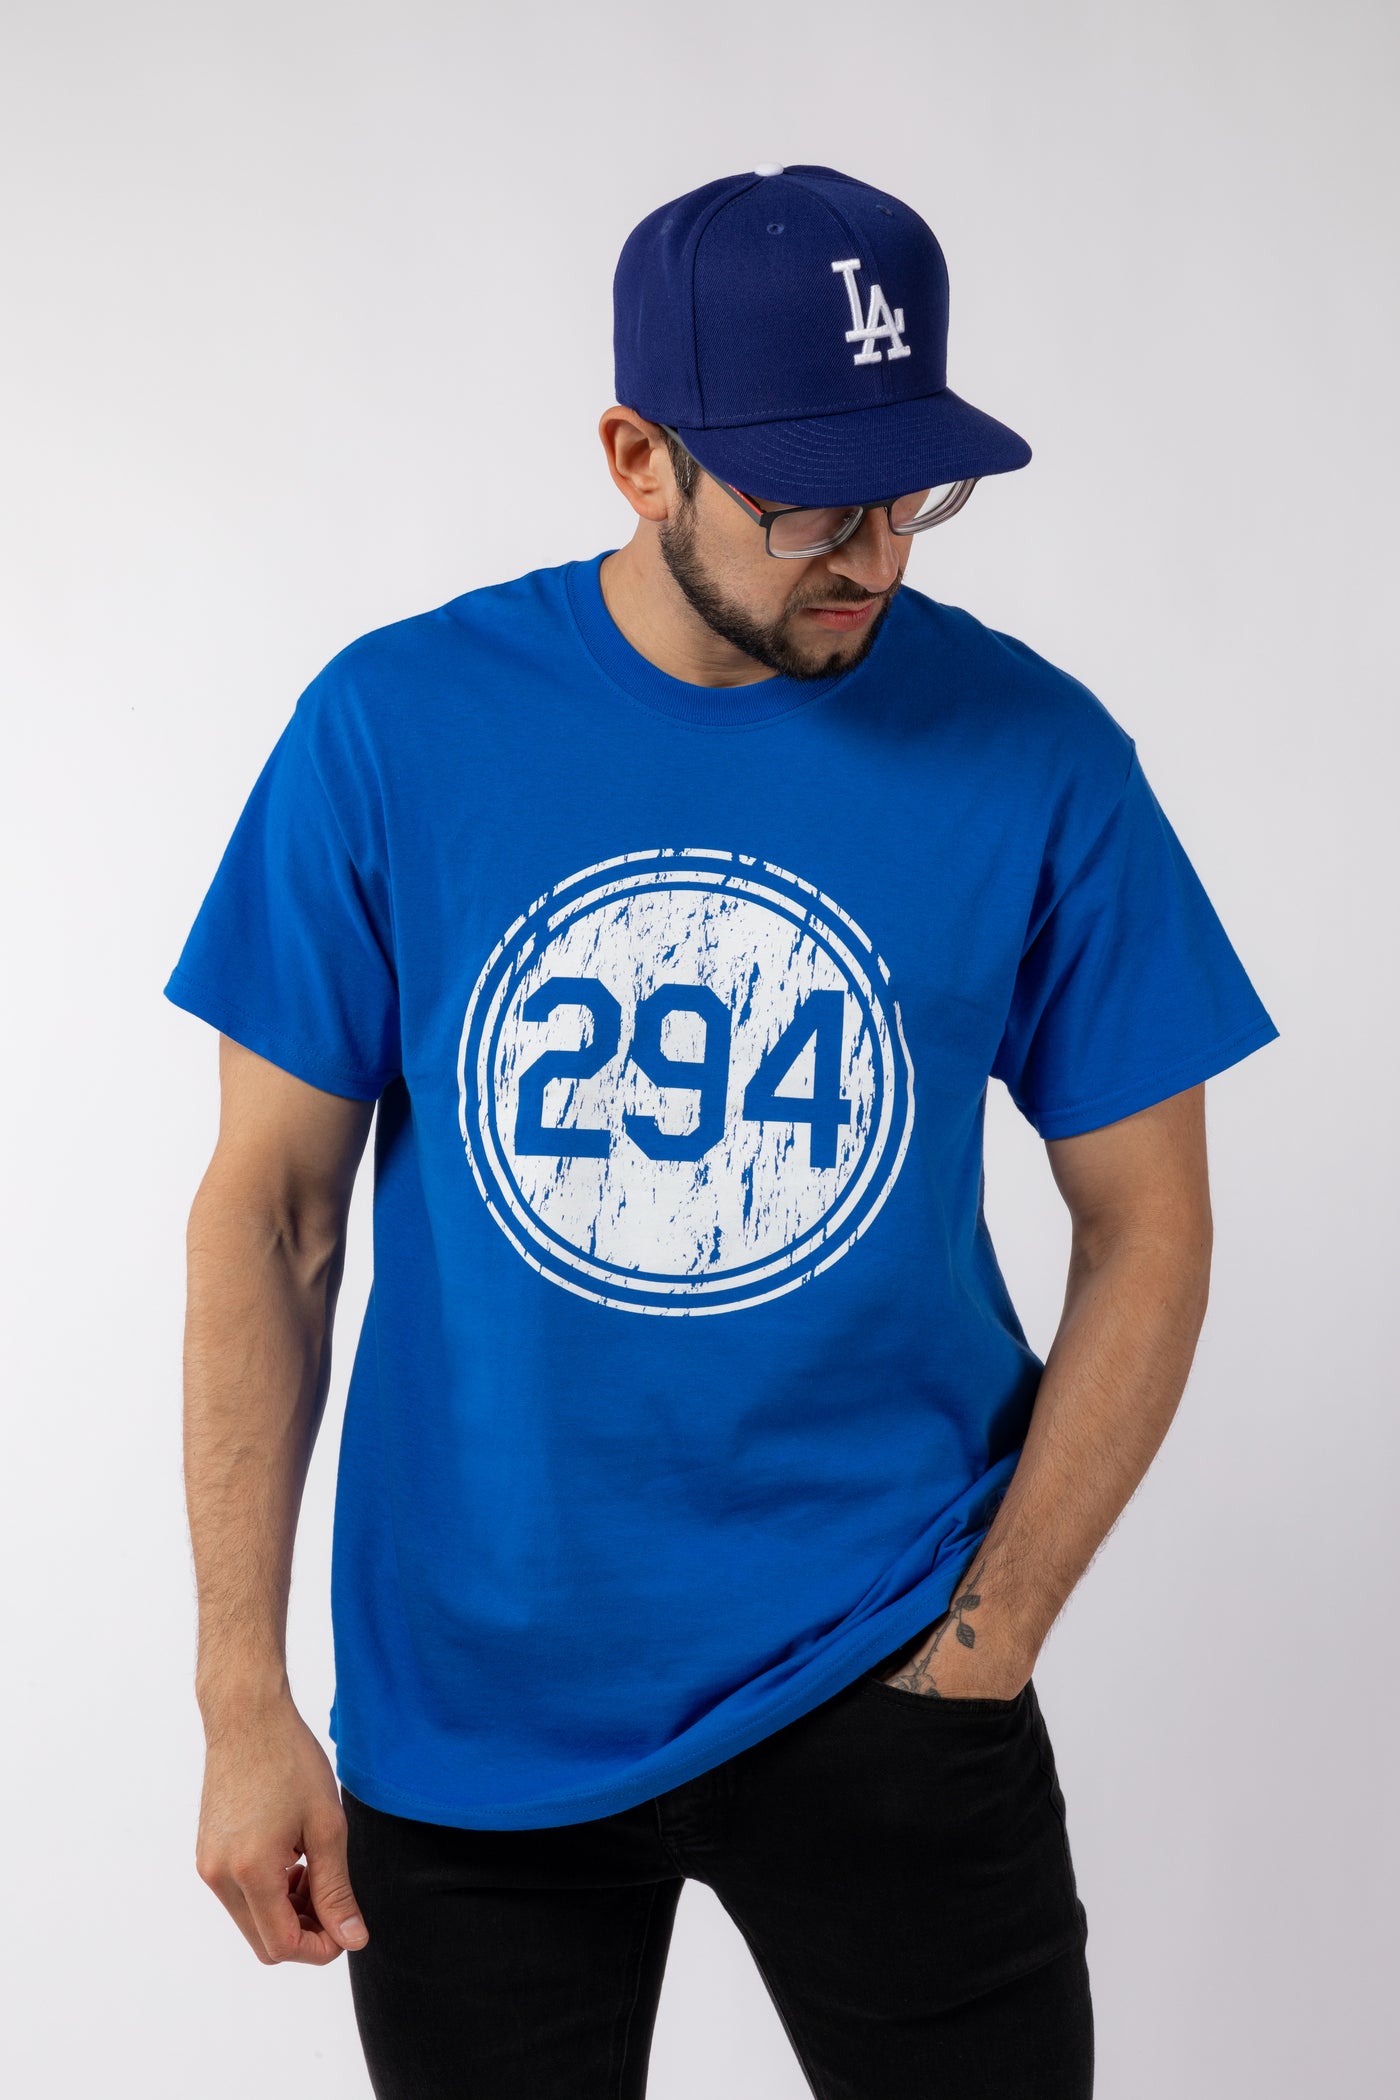 Pantone 294 T-Shirts for Sale